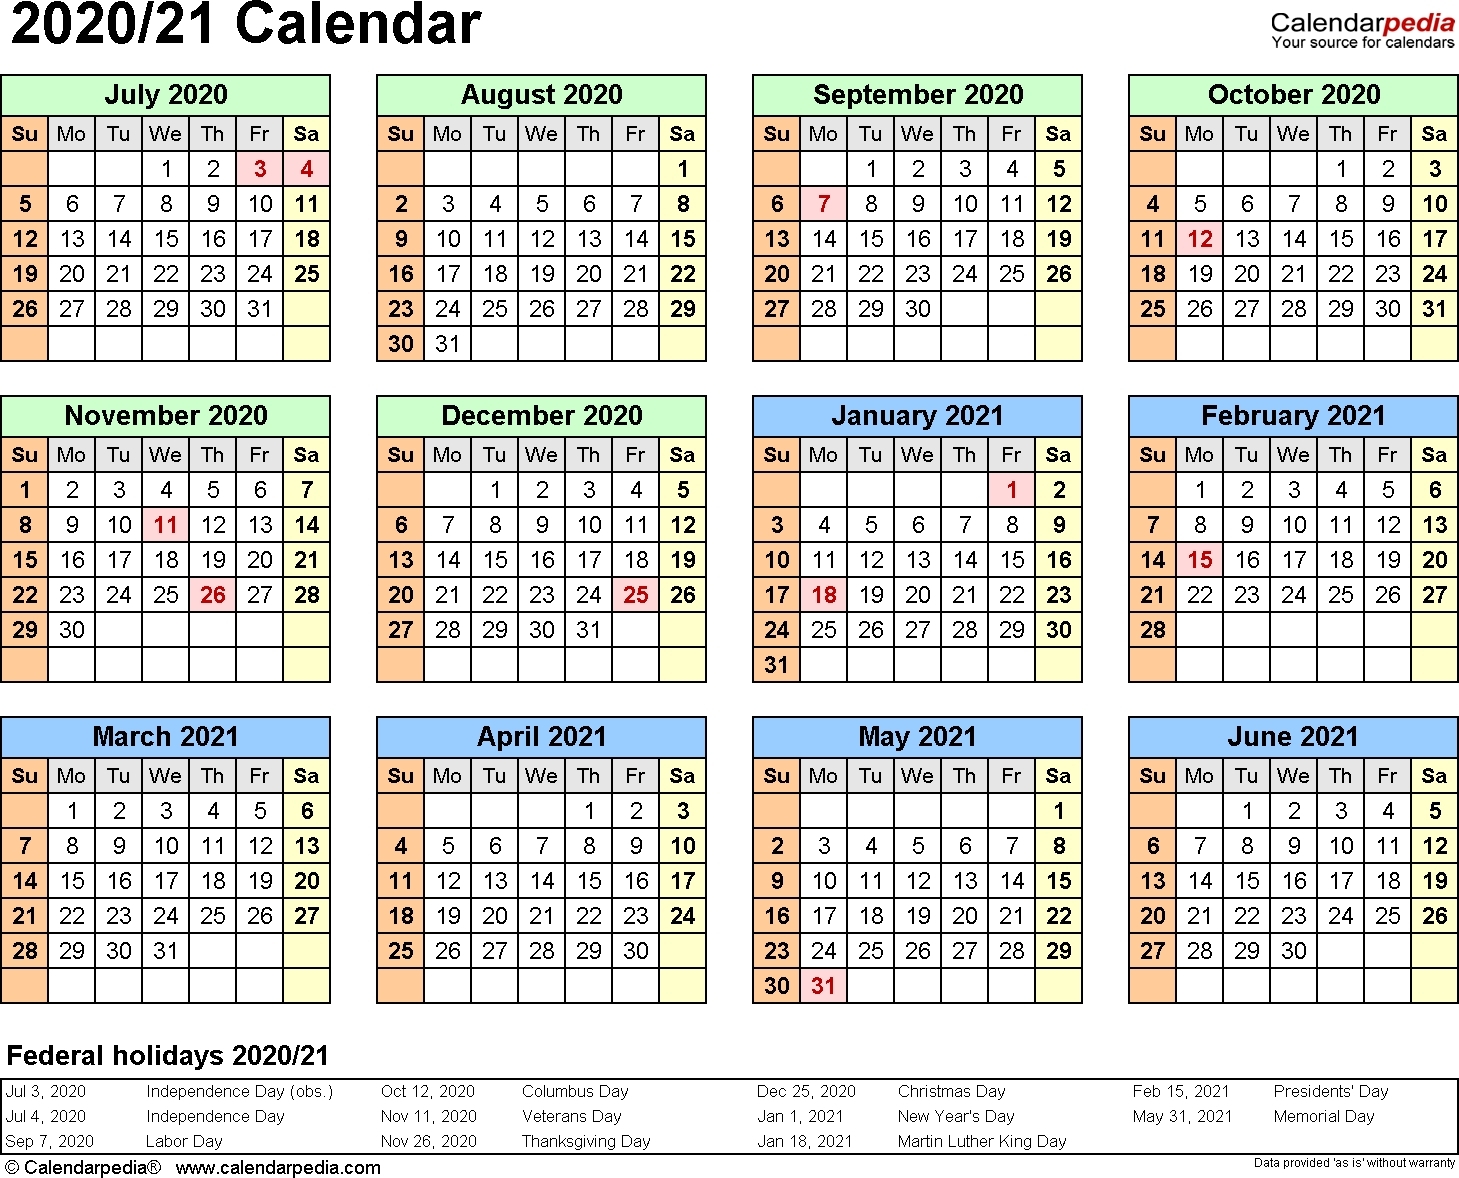 Calendarpedia 2020 Excel | Calendar For Planning  2021 19 Financial Year Calendar